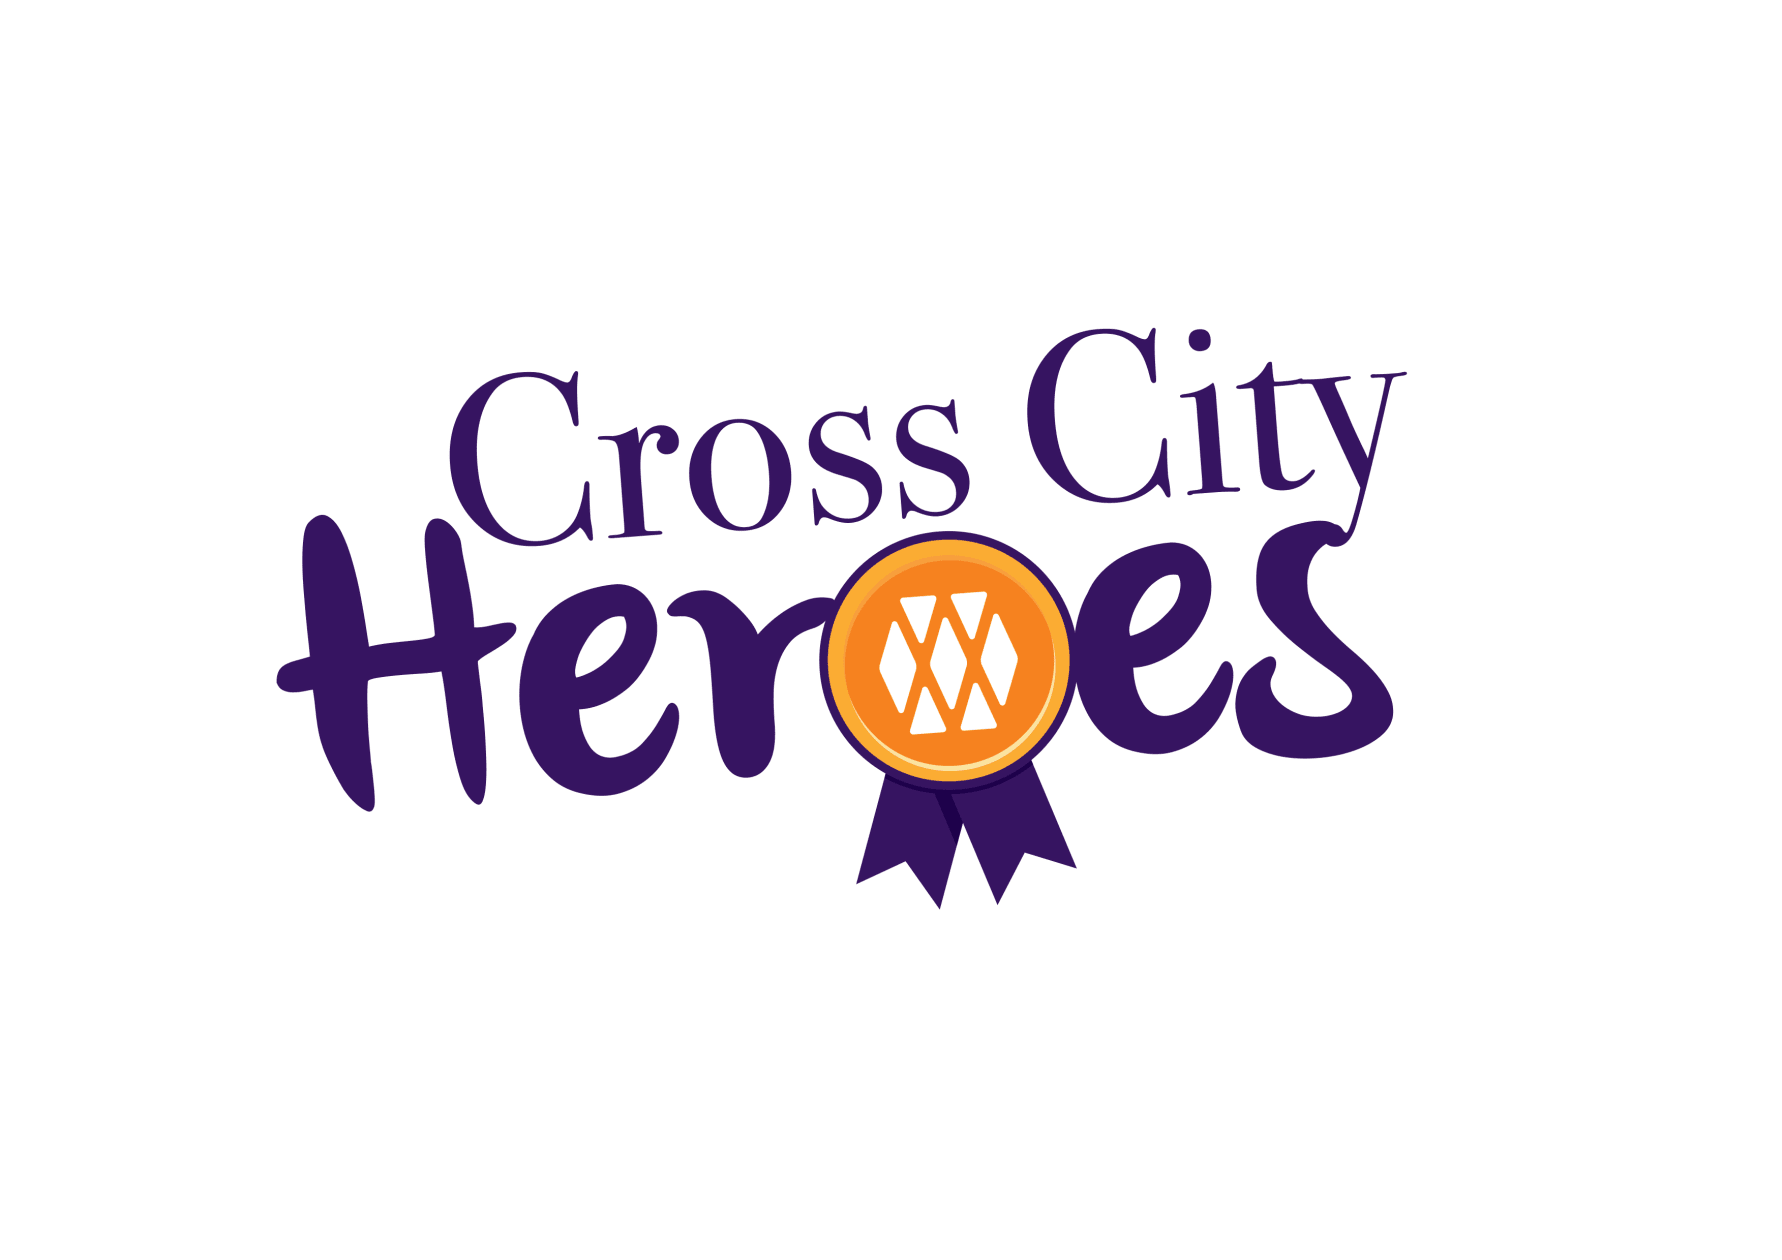 West Midlands Railway is looking for the region’s Cross City Heroes